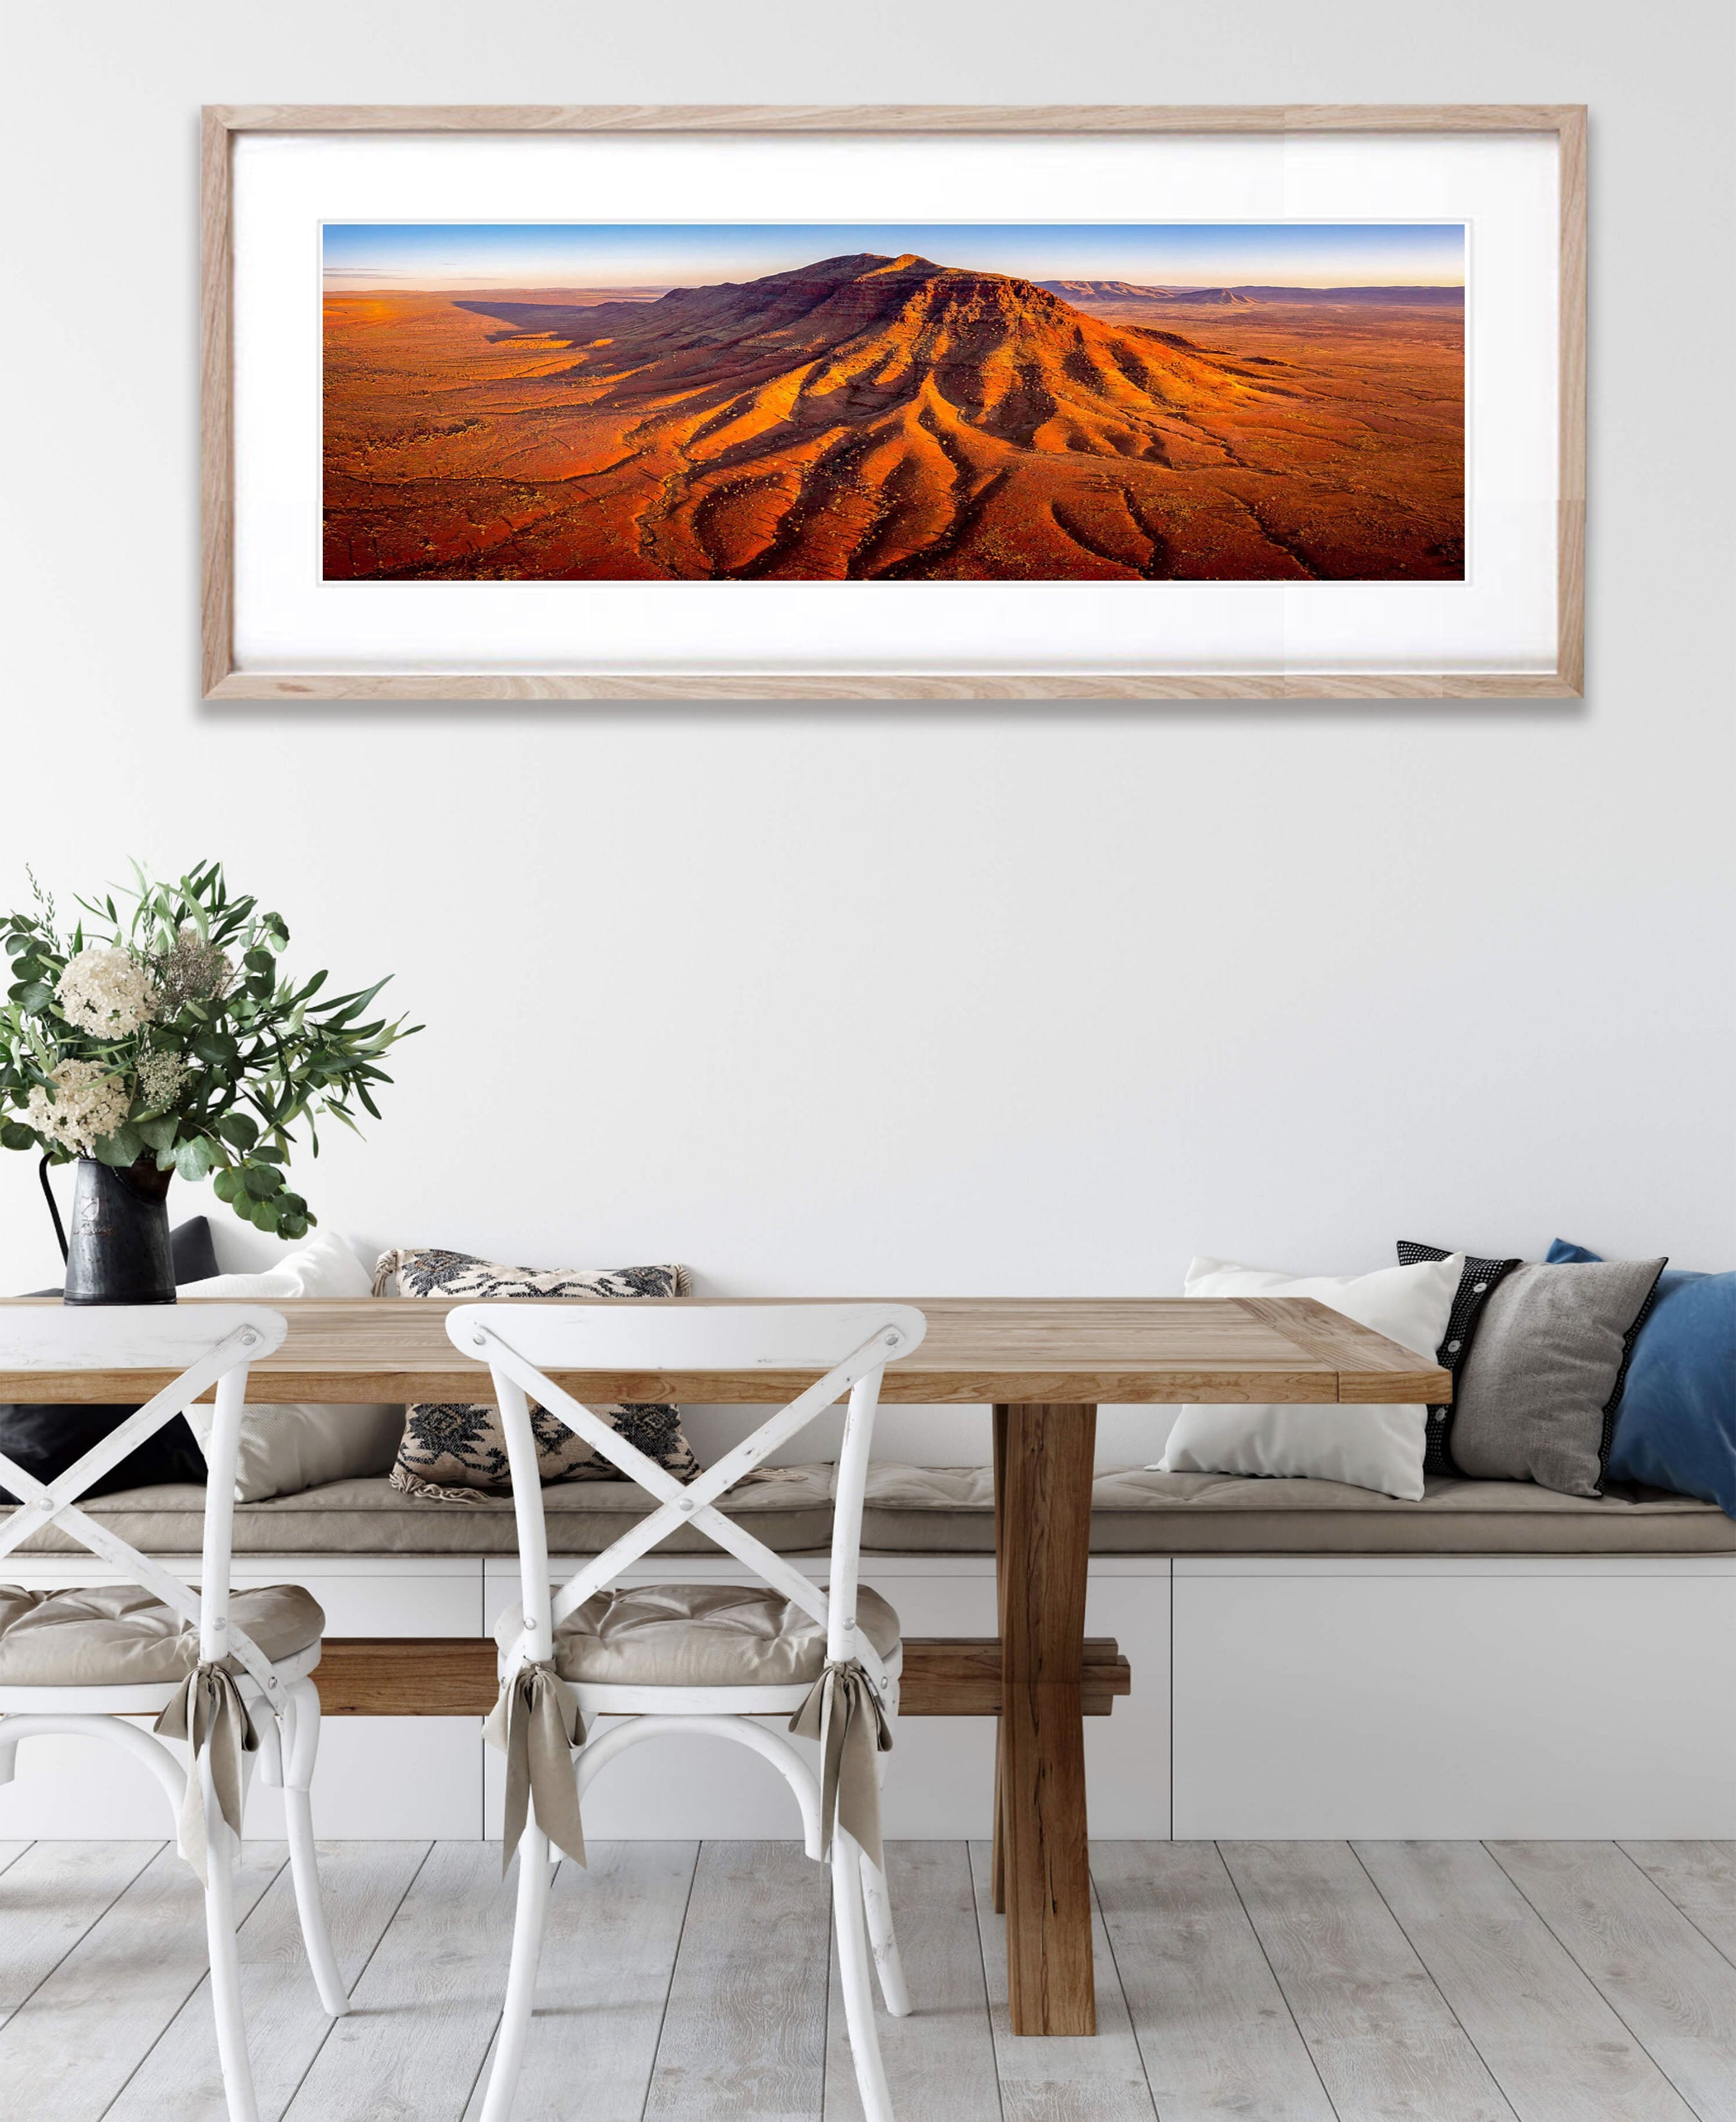 ARTWORK INSTOCK - The Mountain - Mount Bruce, Karijini, WA 250 x 125cms CANVAS RAW OAK FRAME